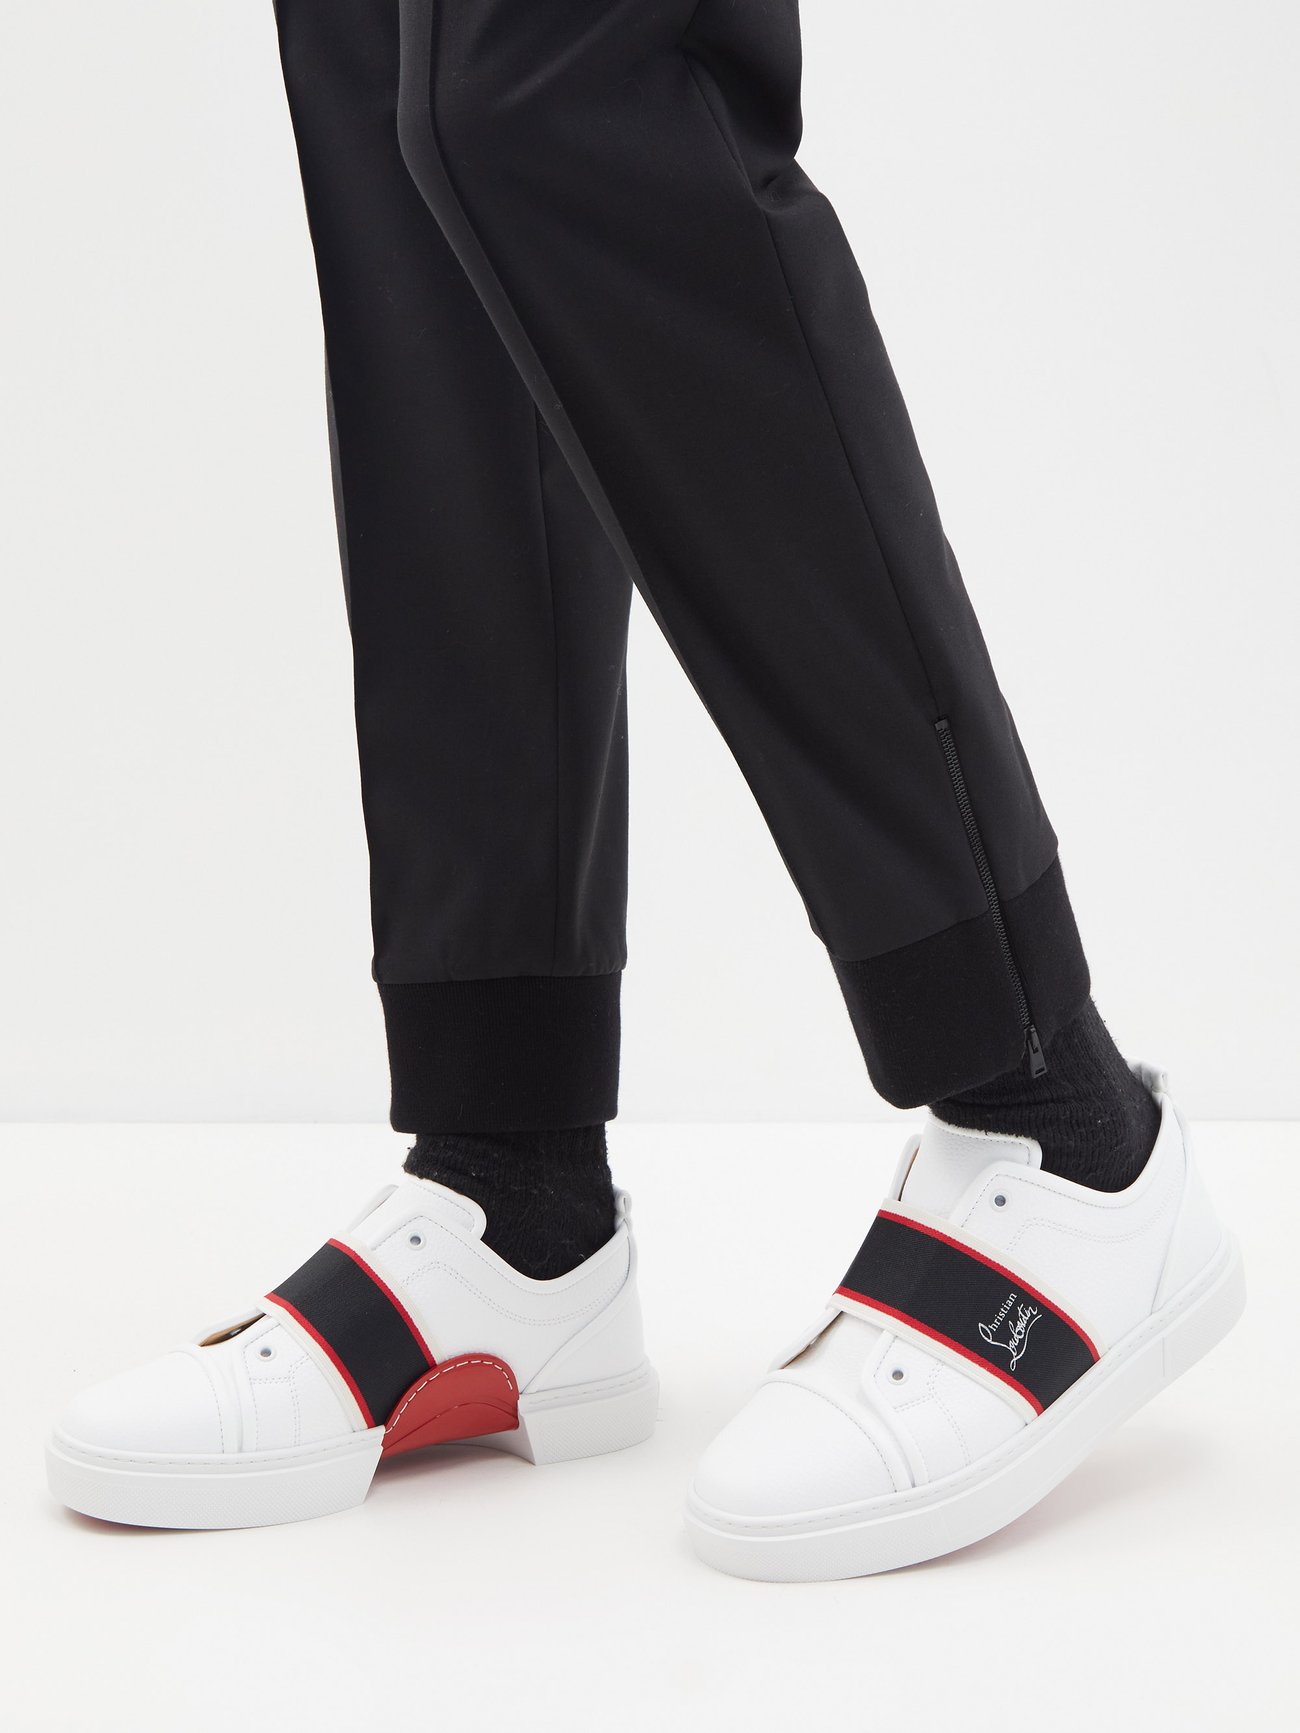 Christian Louboutin Men's Adolescenza Sneaker - White - Low-top Sneakers - 10.5